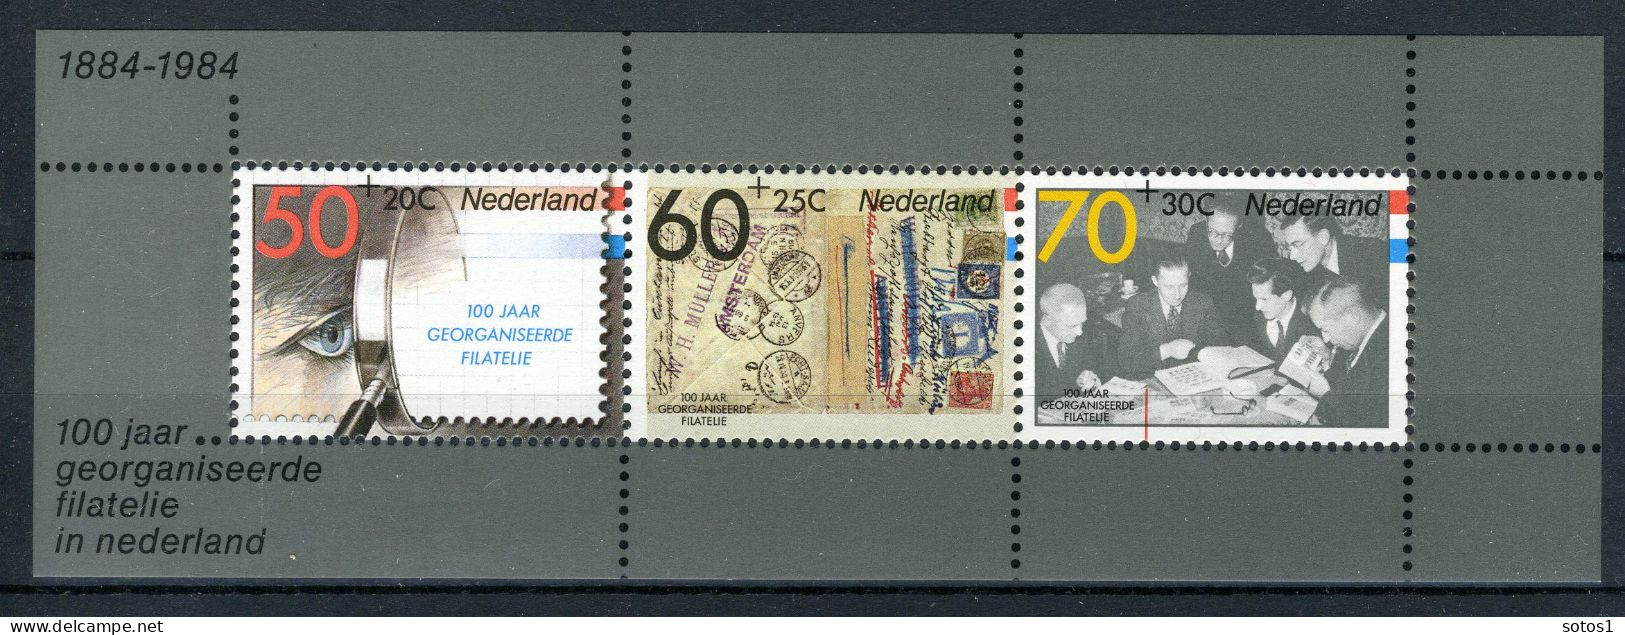 NEDERLAND 1313 MNH Blok 1984 - Filacento -2 - Blocs